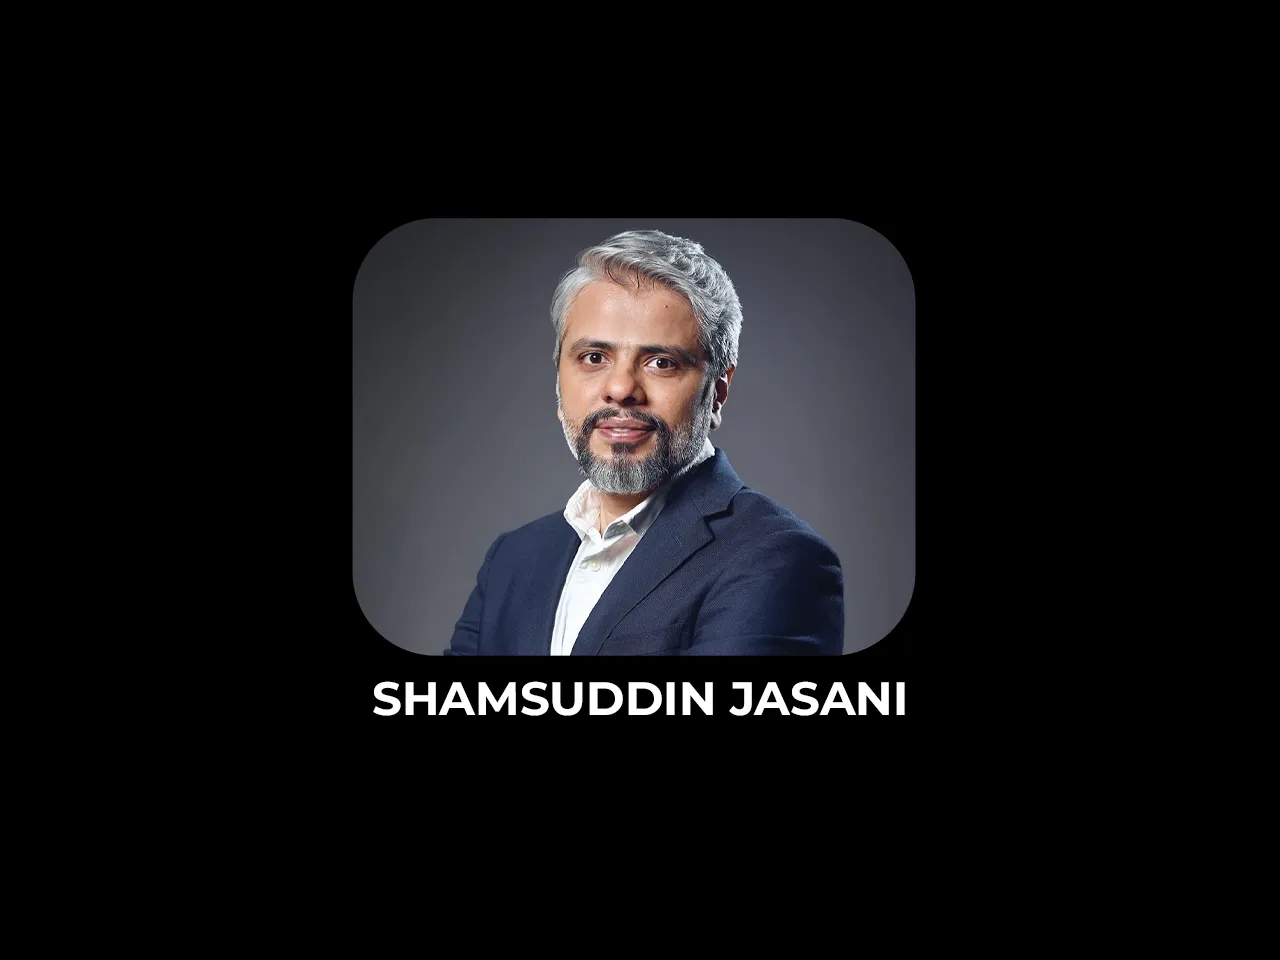 Wunderman Thompson's Shamsuddin Jasani steps down